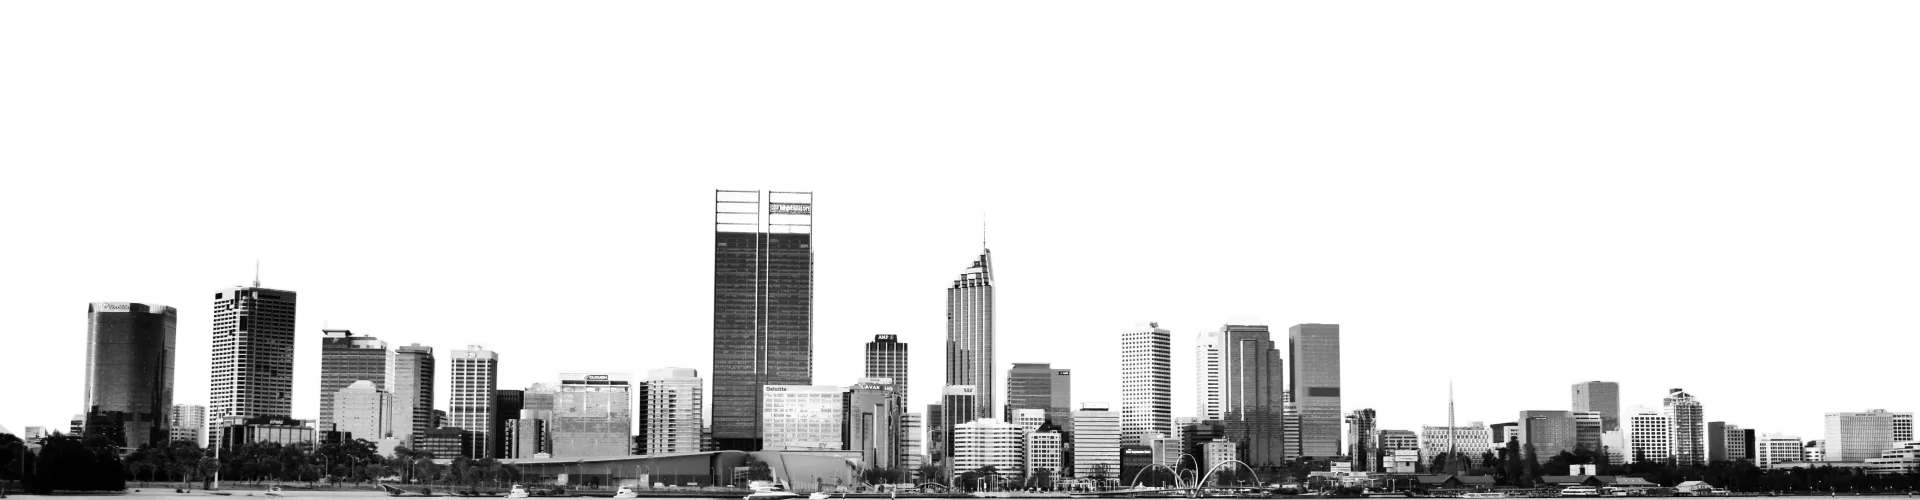 the city of Perth skyline